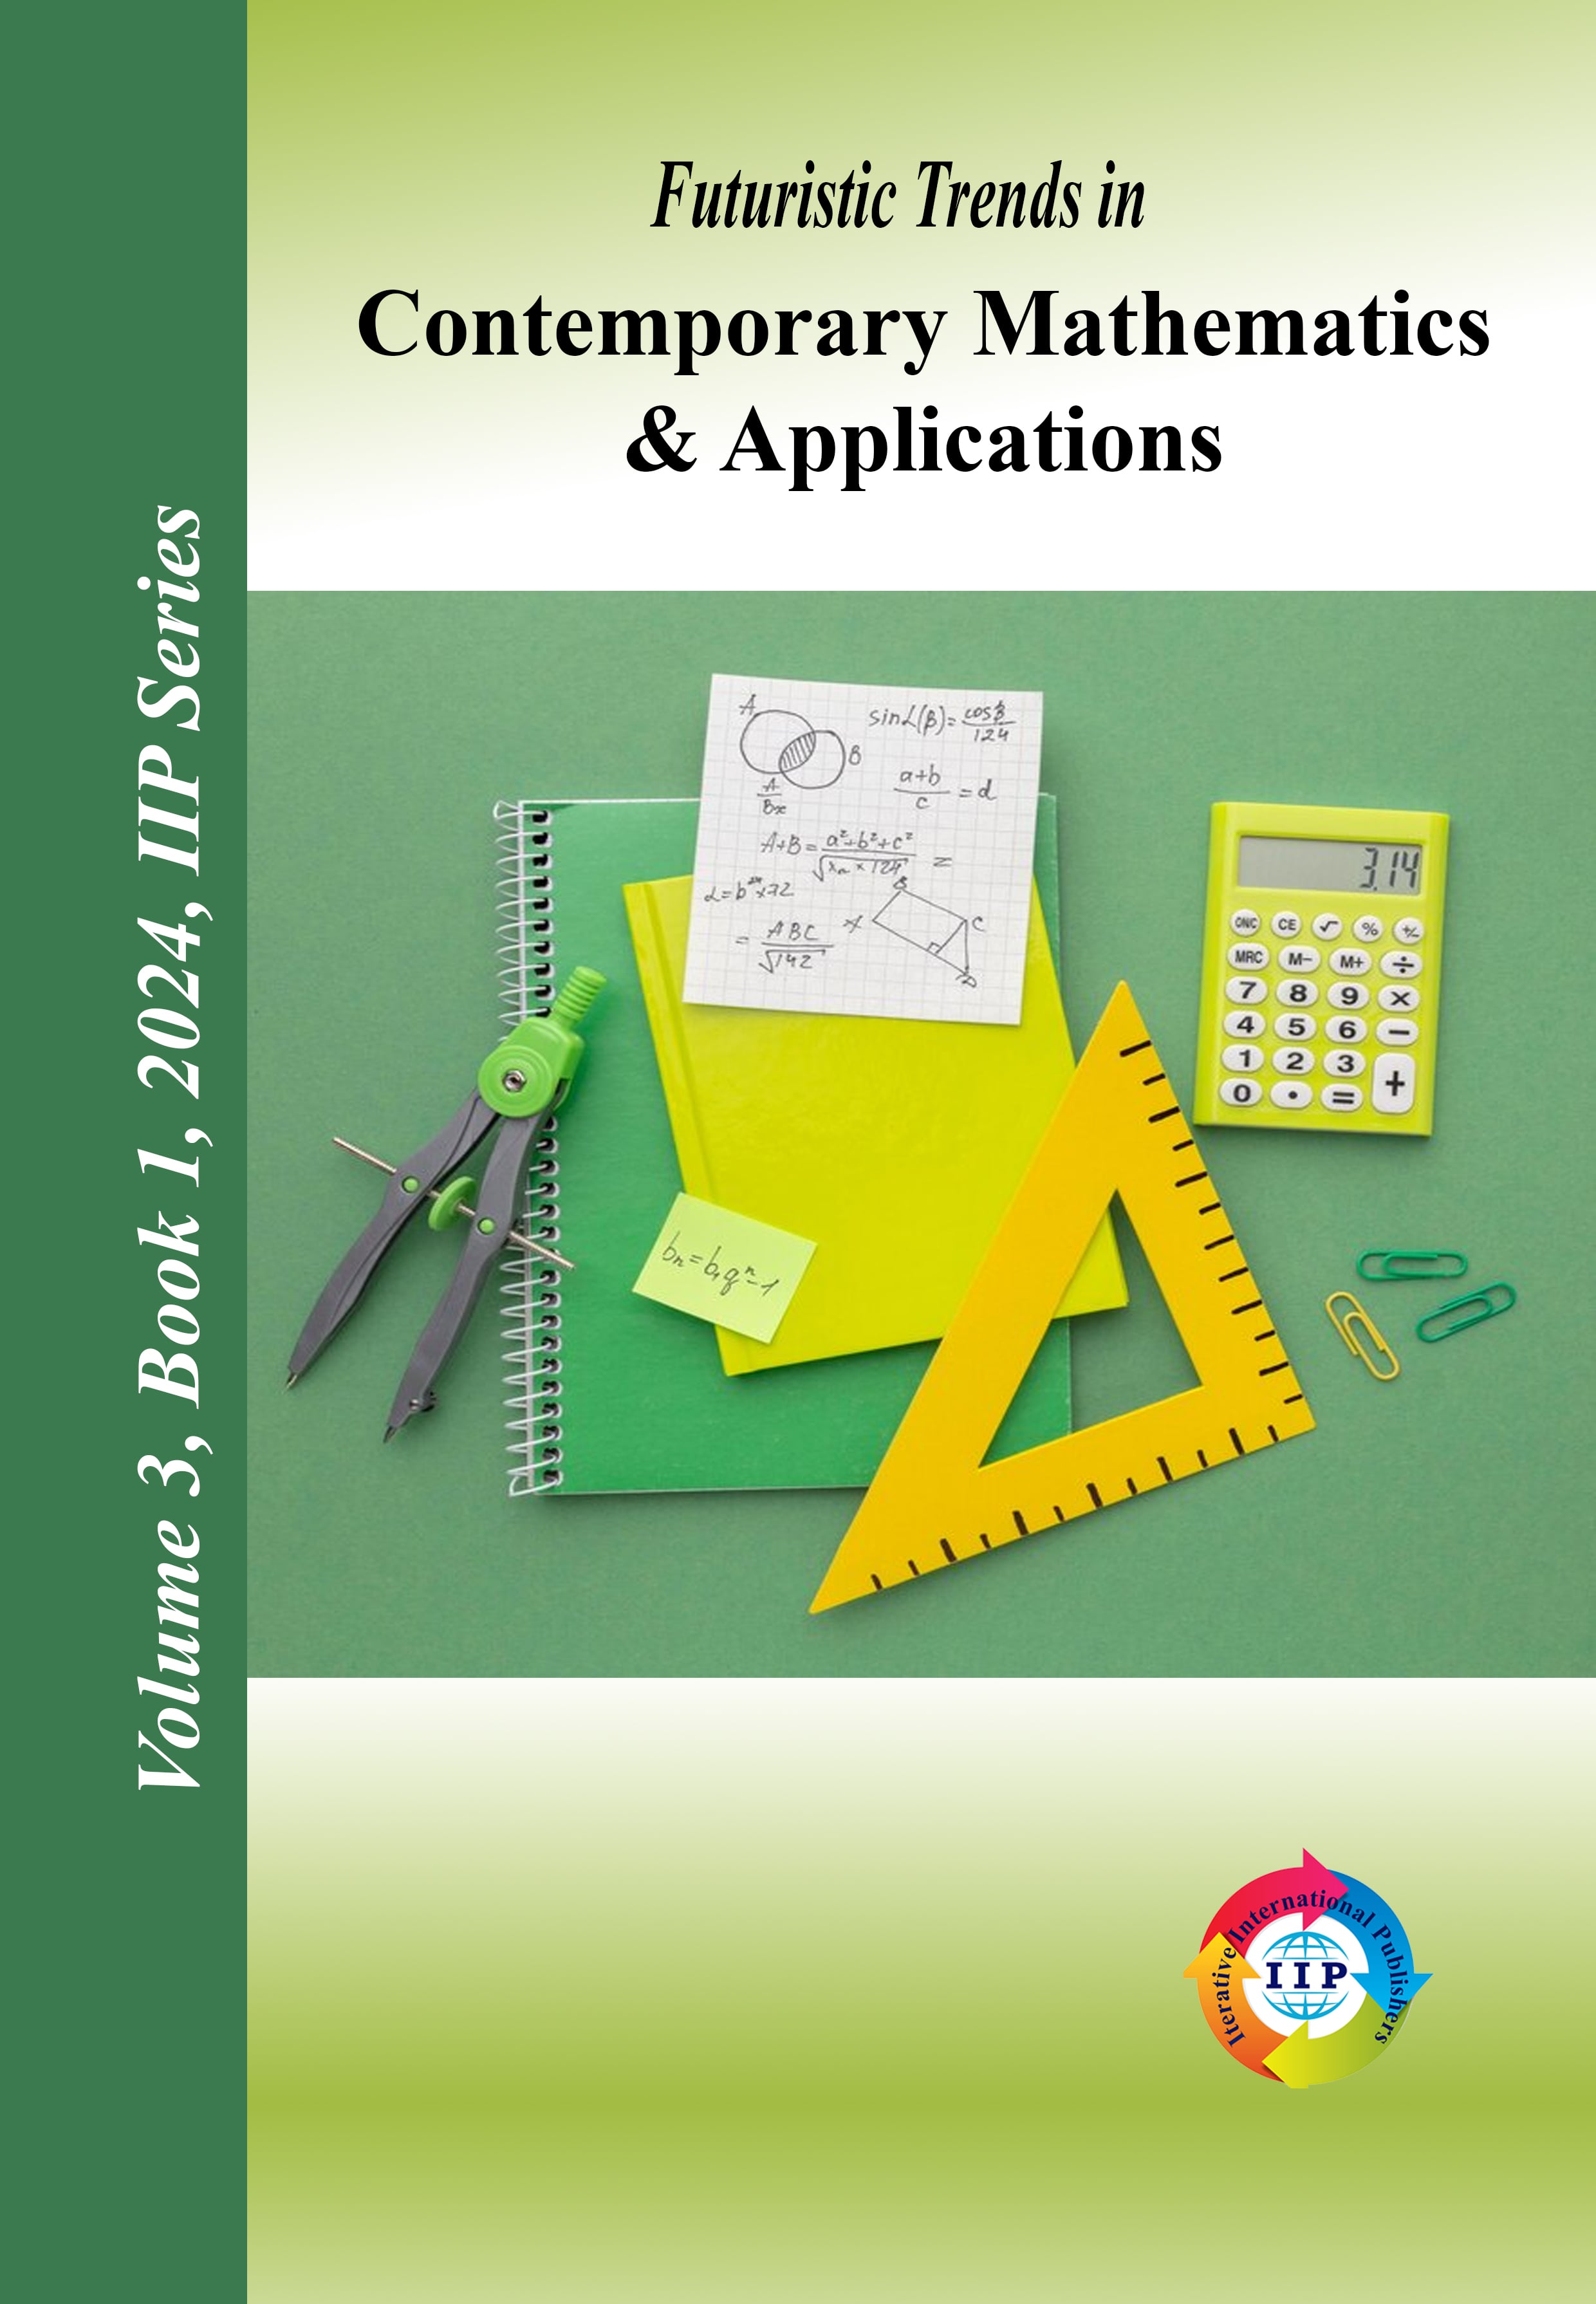 Futuristic Trends in Contemporary Mathematics & Applications Volume 3 Book 1